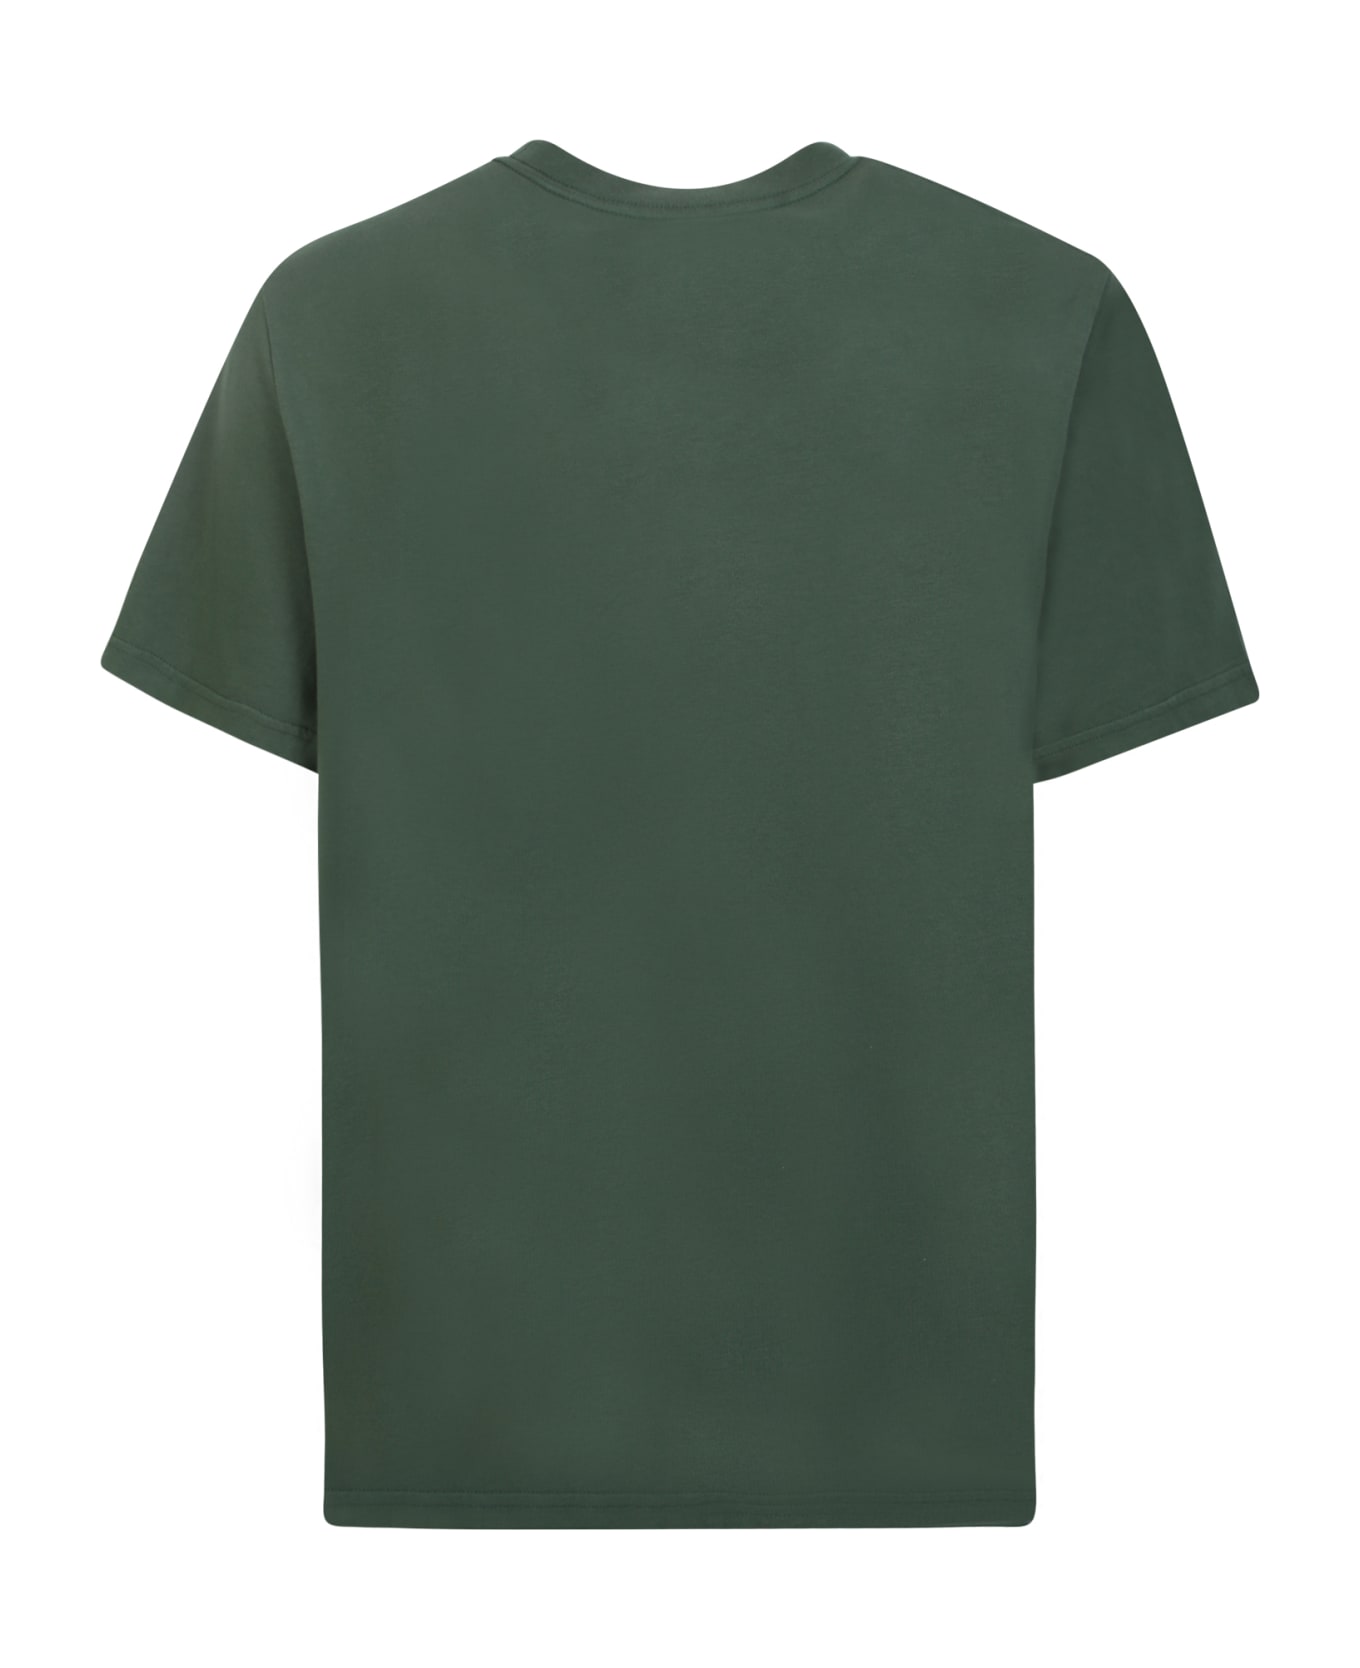 Martine Rose No Hard Felling Dark Green T-shirt - Green シャツ